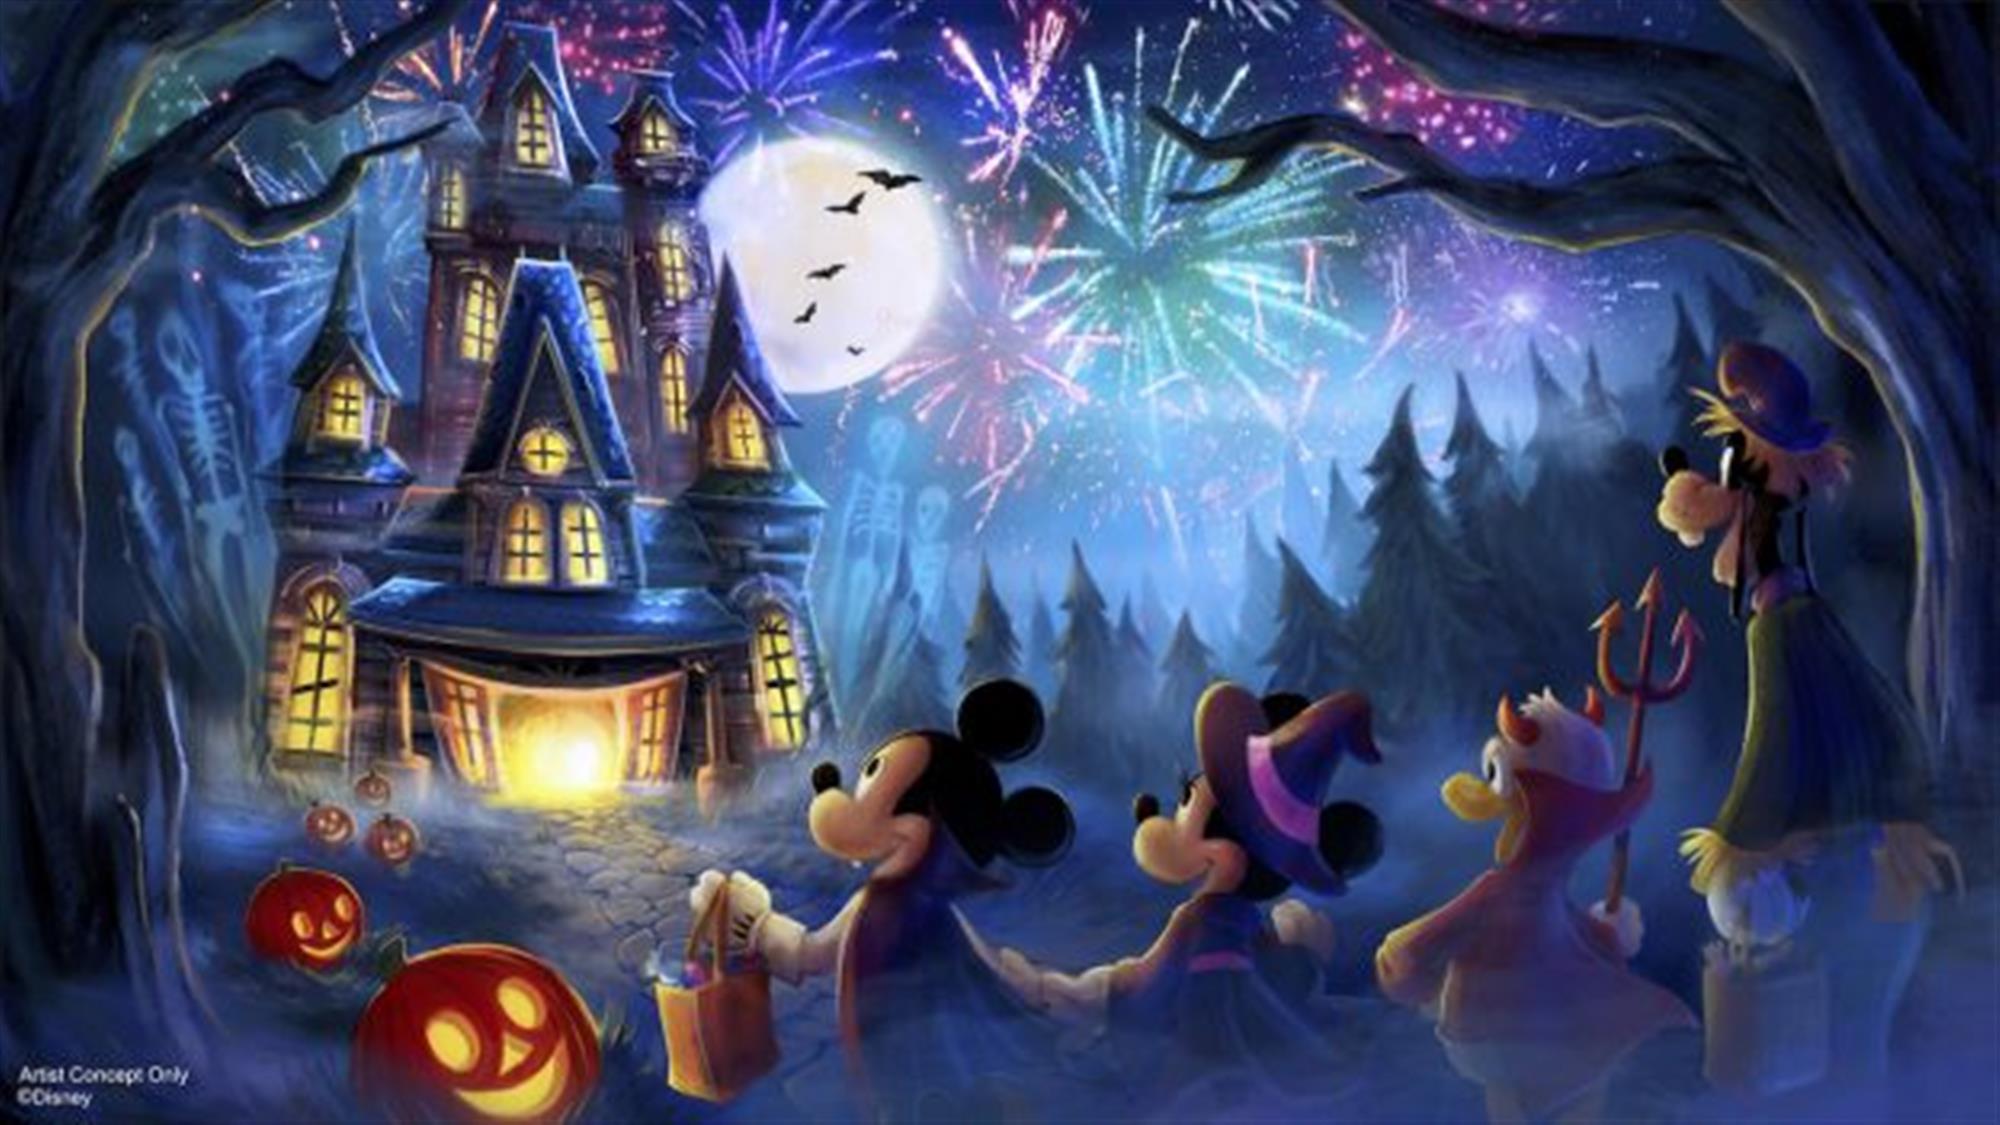 New Halloween Fireworks Spectacular Coming to Mickey's NotSoScary